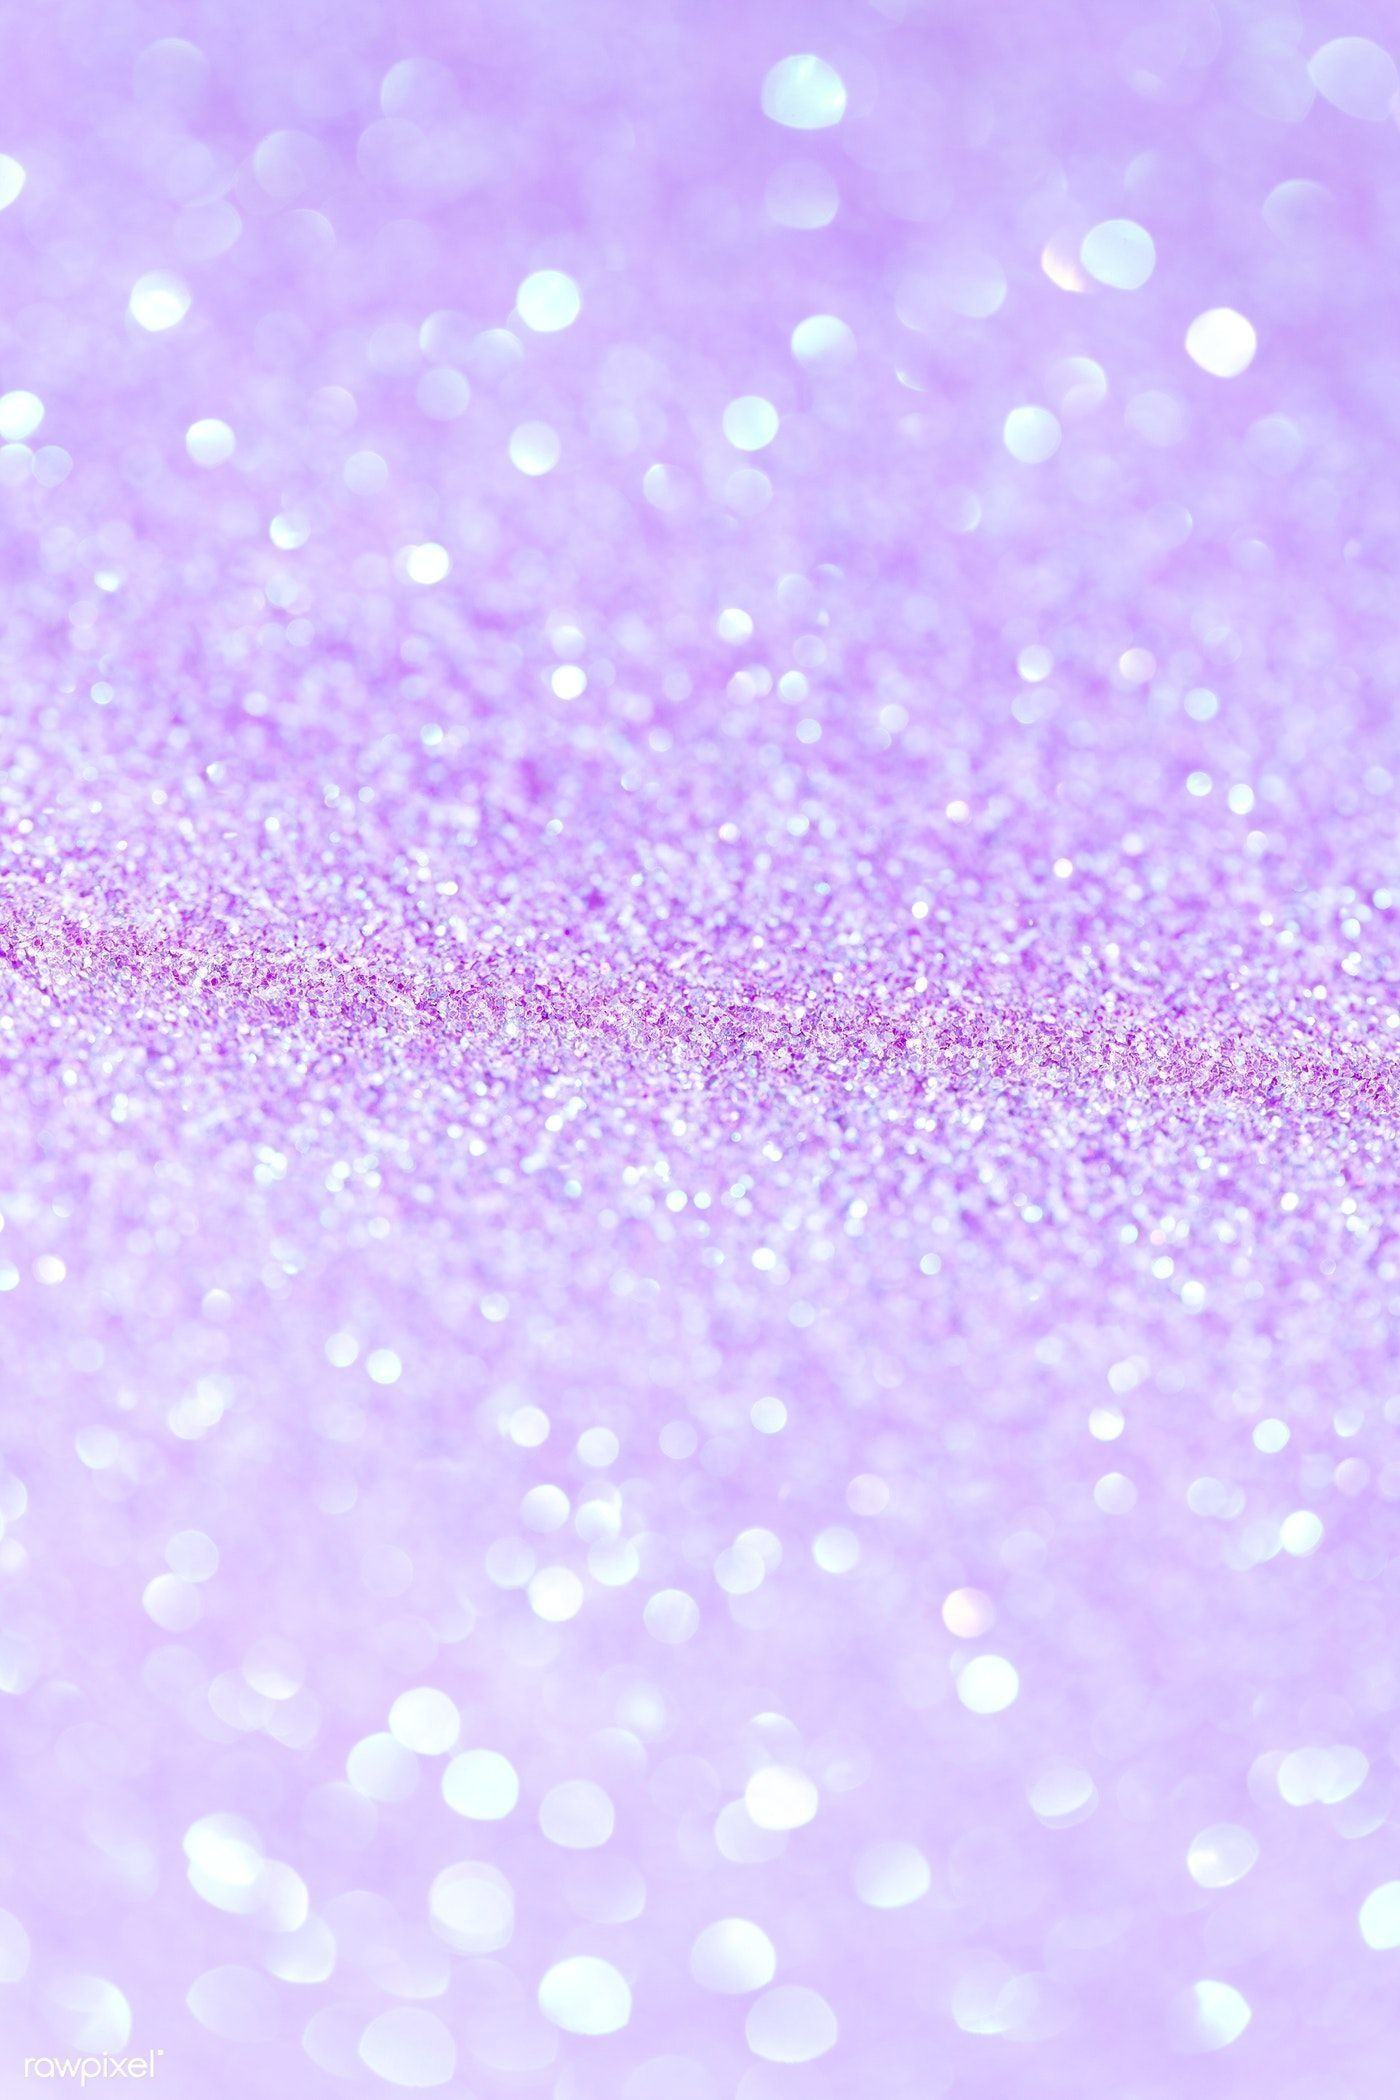 A close up of purple glitter on the background - Glitter, pastel purple